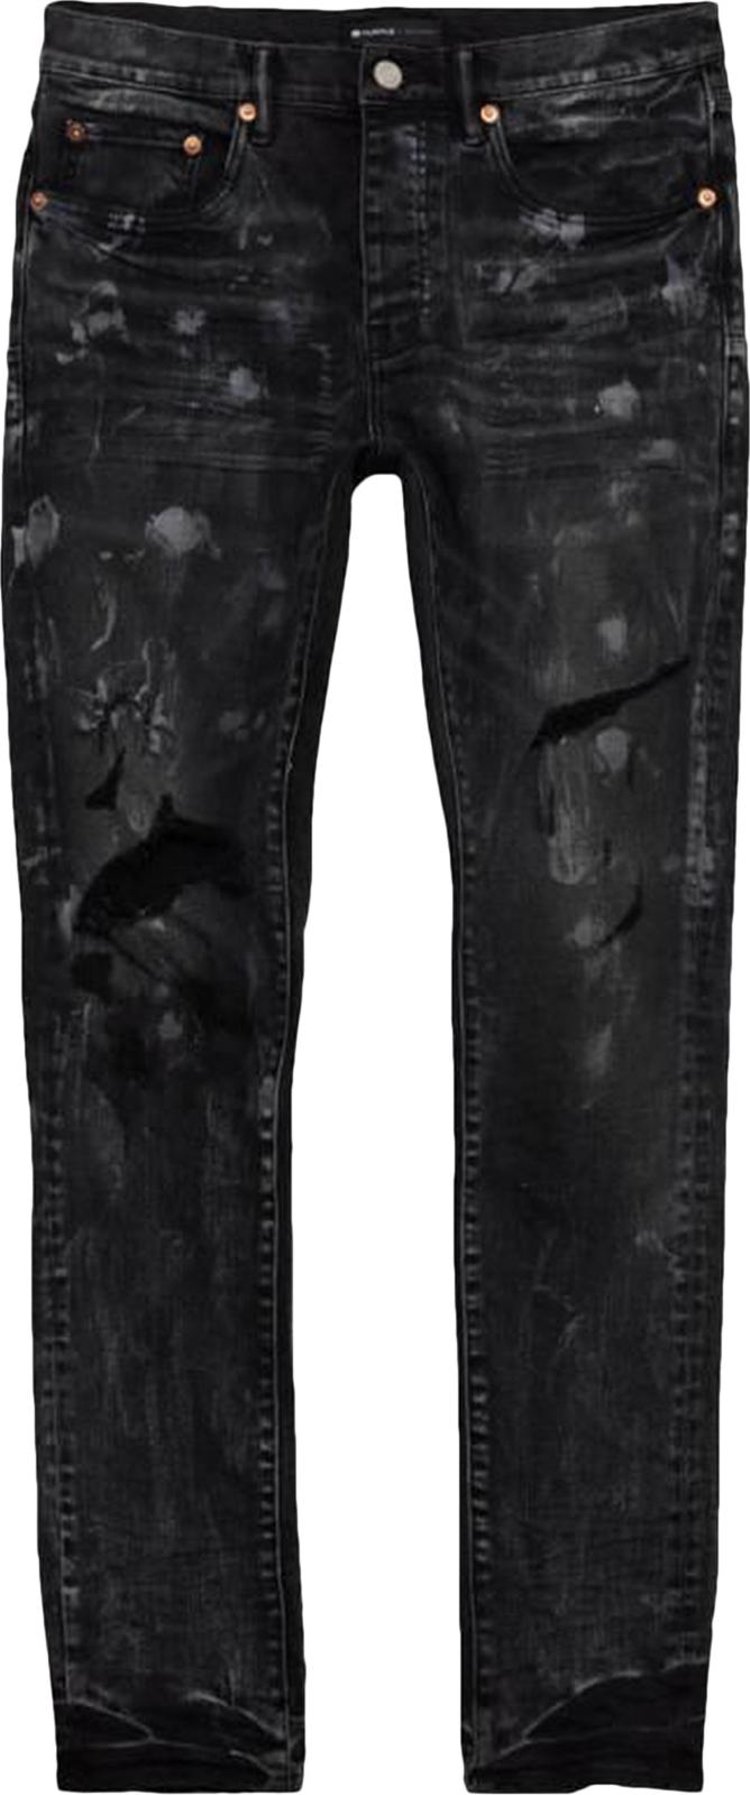 NWT PURPLE BRAND Black Super Fade Weft Repair Jeans Size 36/46 $275 